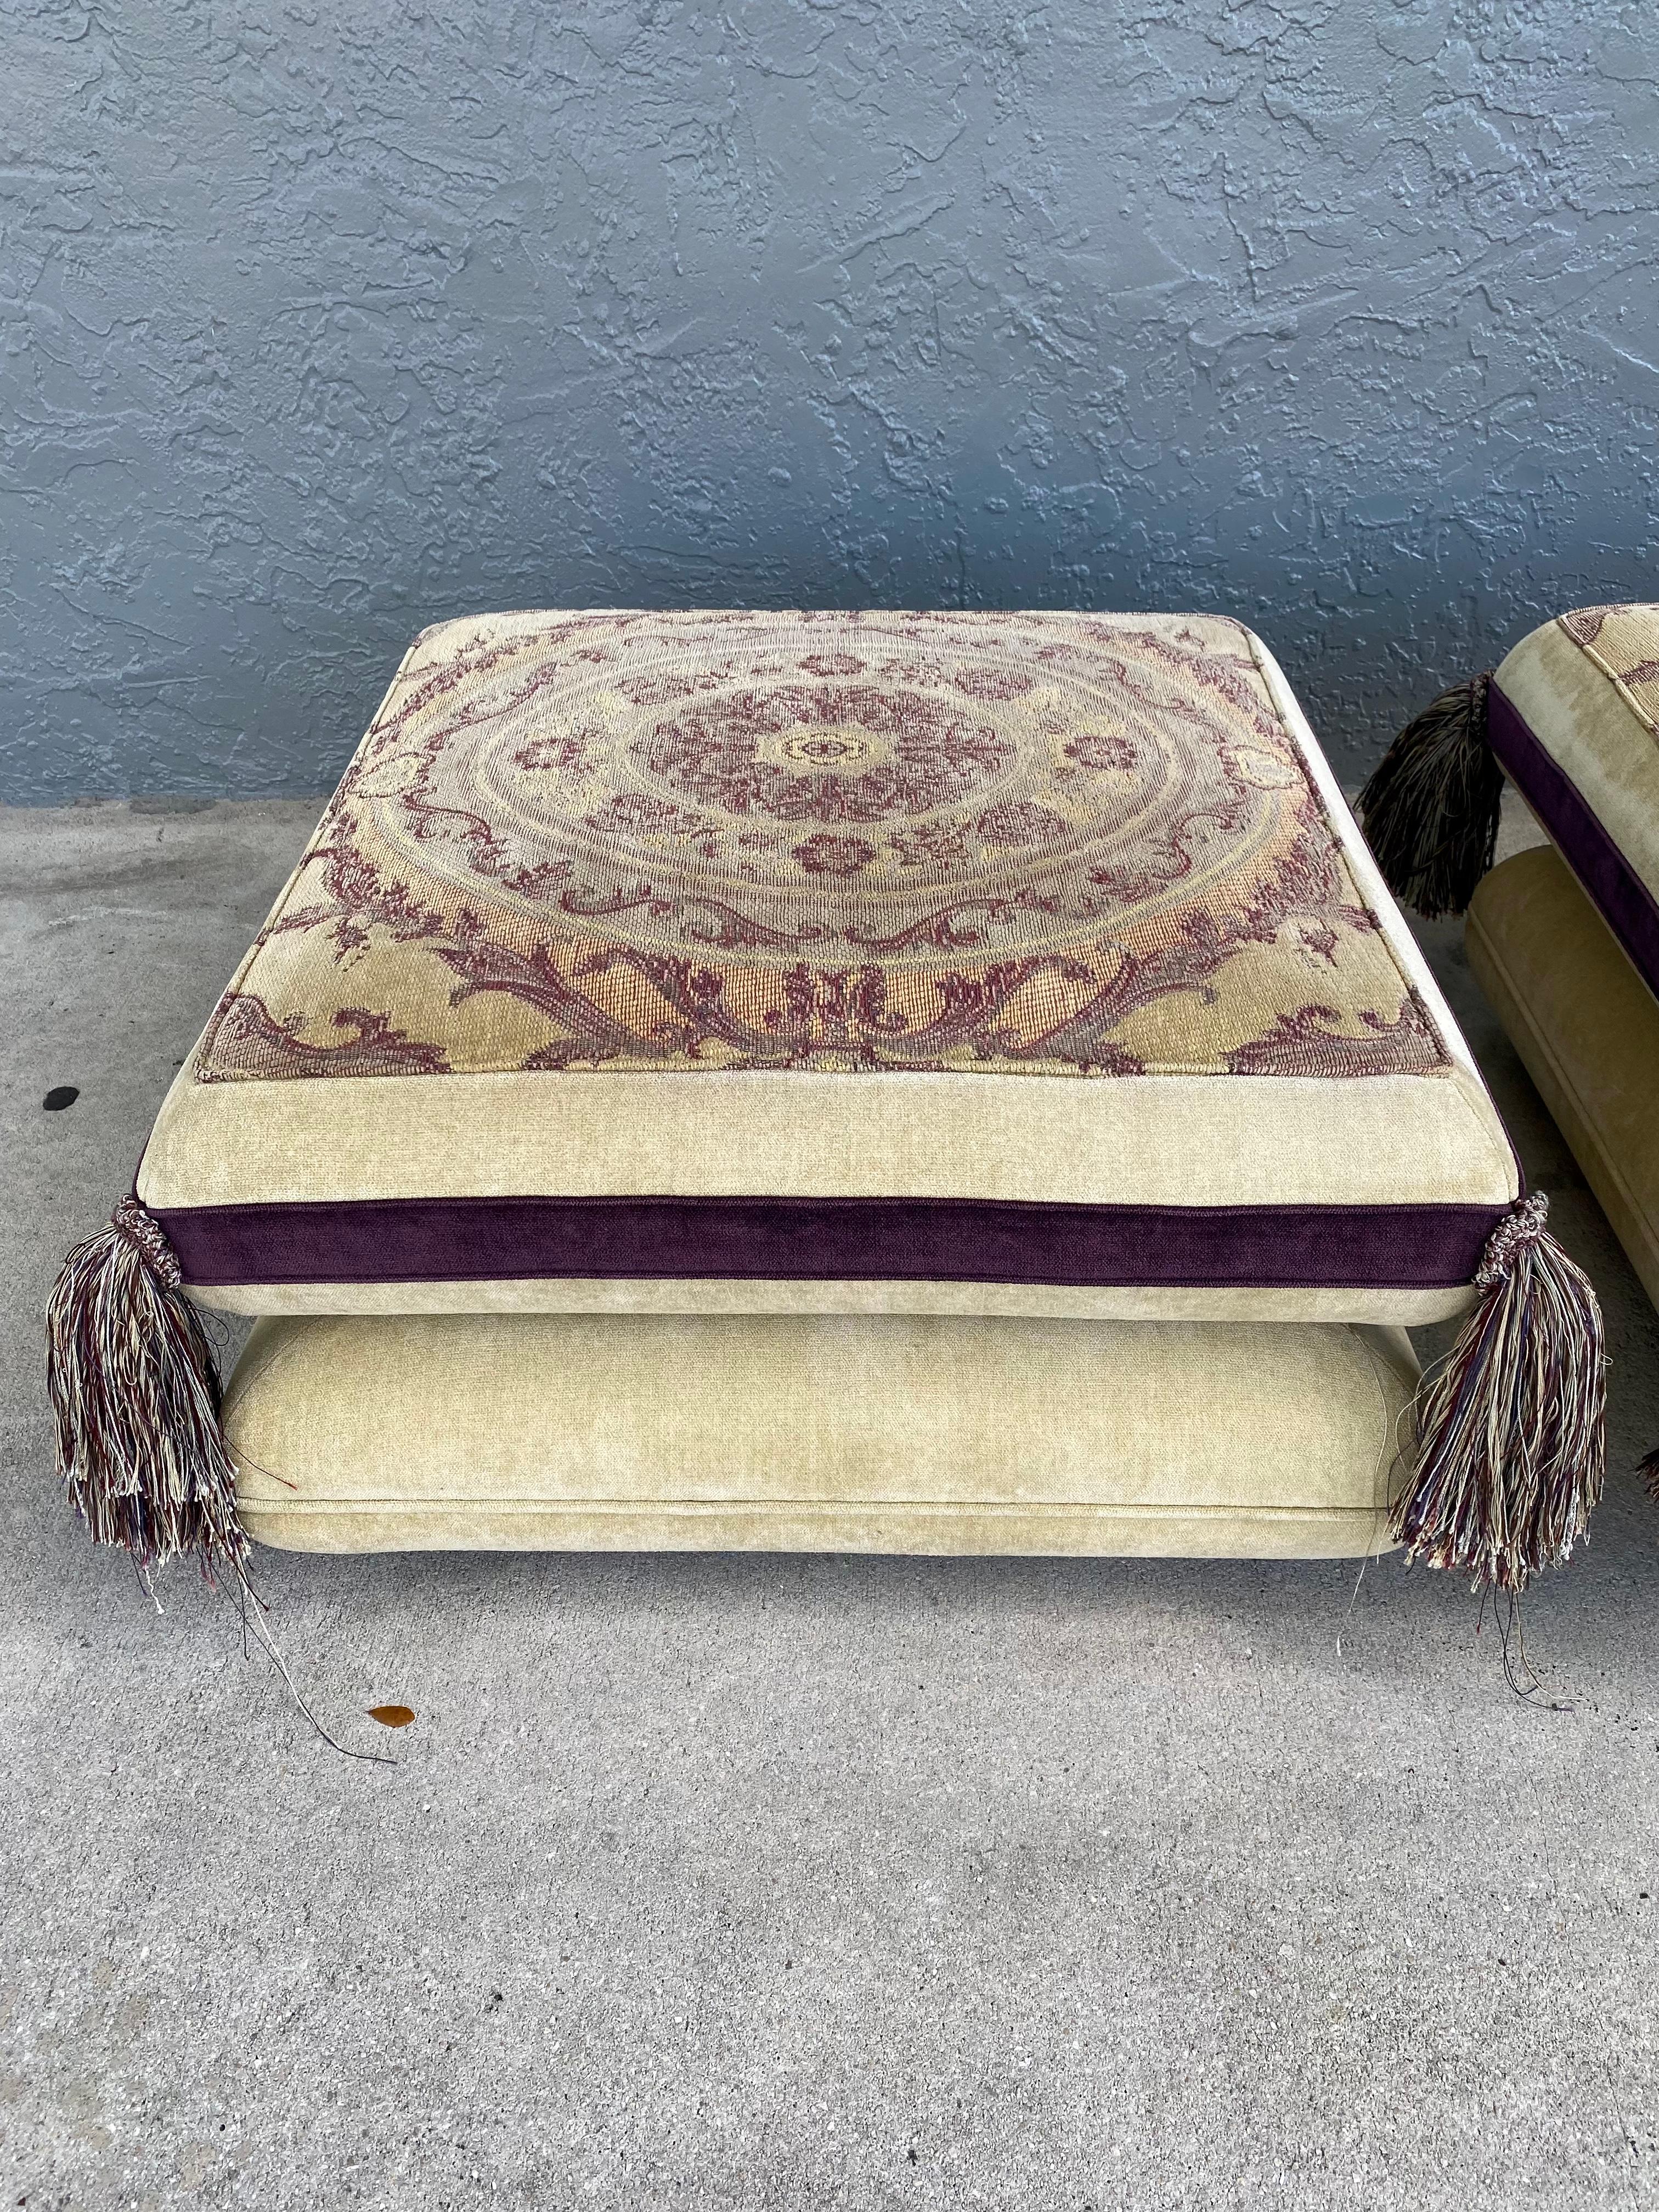 Rare Roche Bobois “Mah Jong” Style Floor Pillowtop Ottoman Stools, Set of 2 For Sale 1